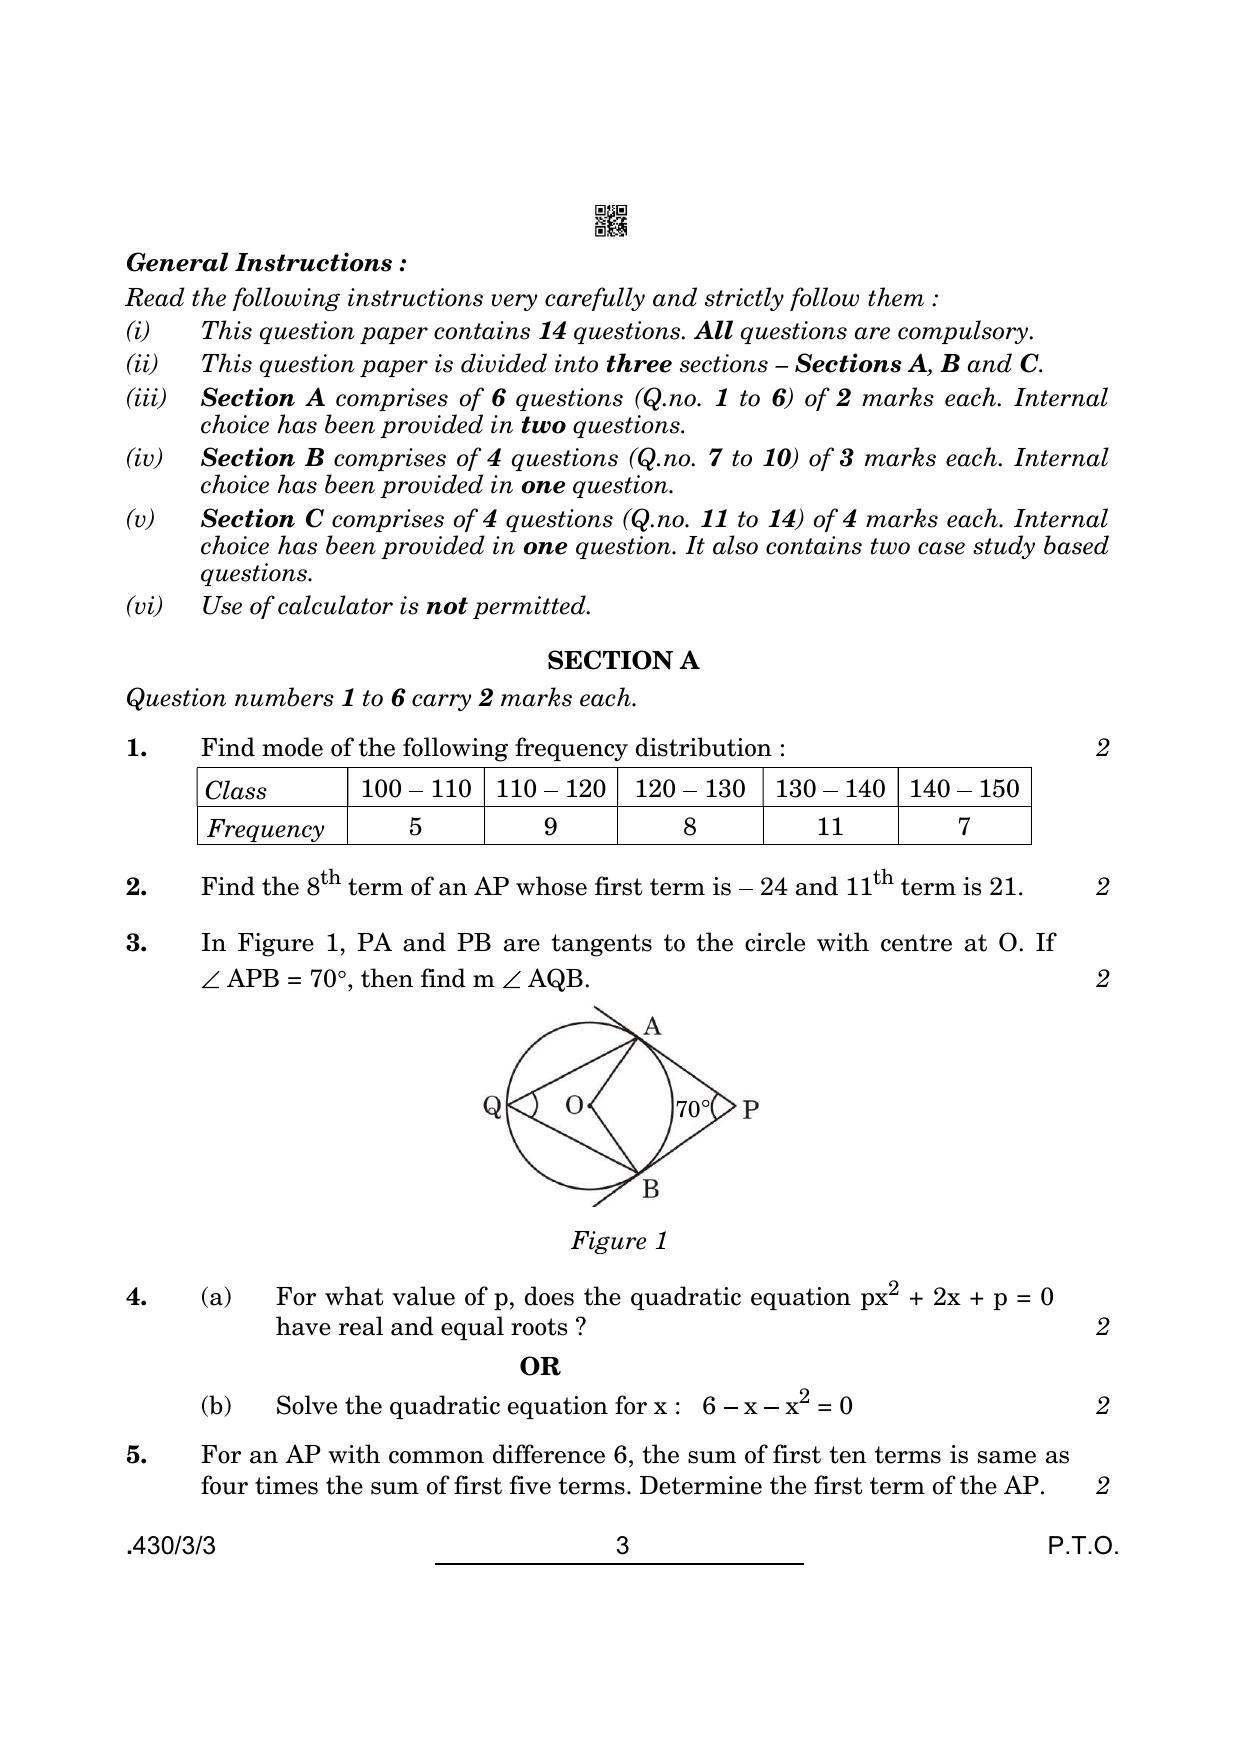 CBSE Class 10 Maths Basic (430/3/3 - SET 3) 2022 Question Paper - Page 3